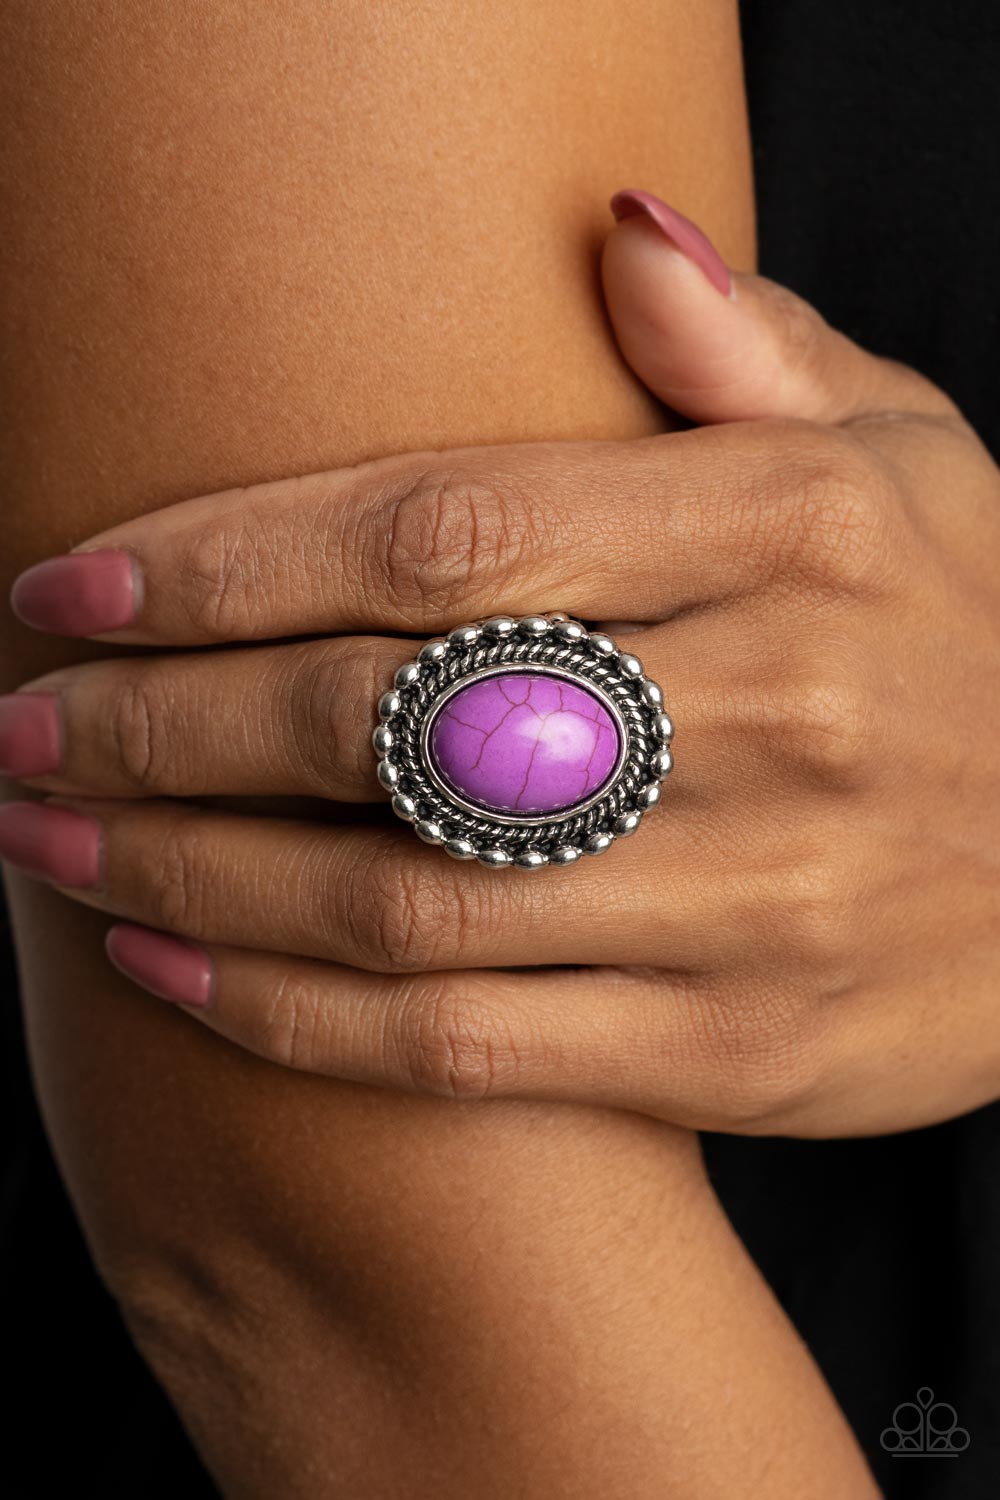 Sedona Soul Purple Stone Ring - Paparazzi Accessories - lightbox -CarasShop.com - $5 Jewelry by Cara Jewels